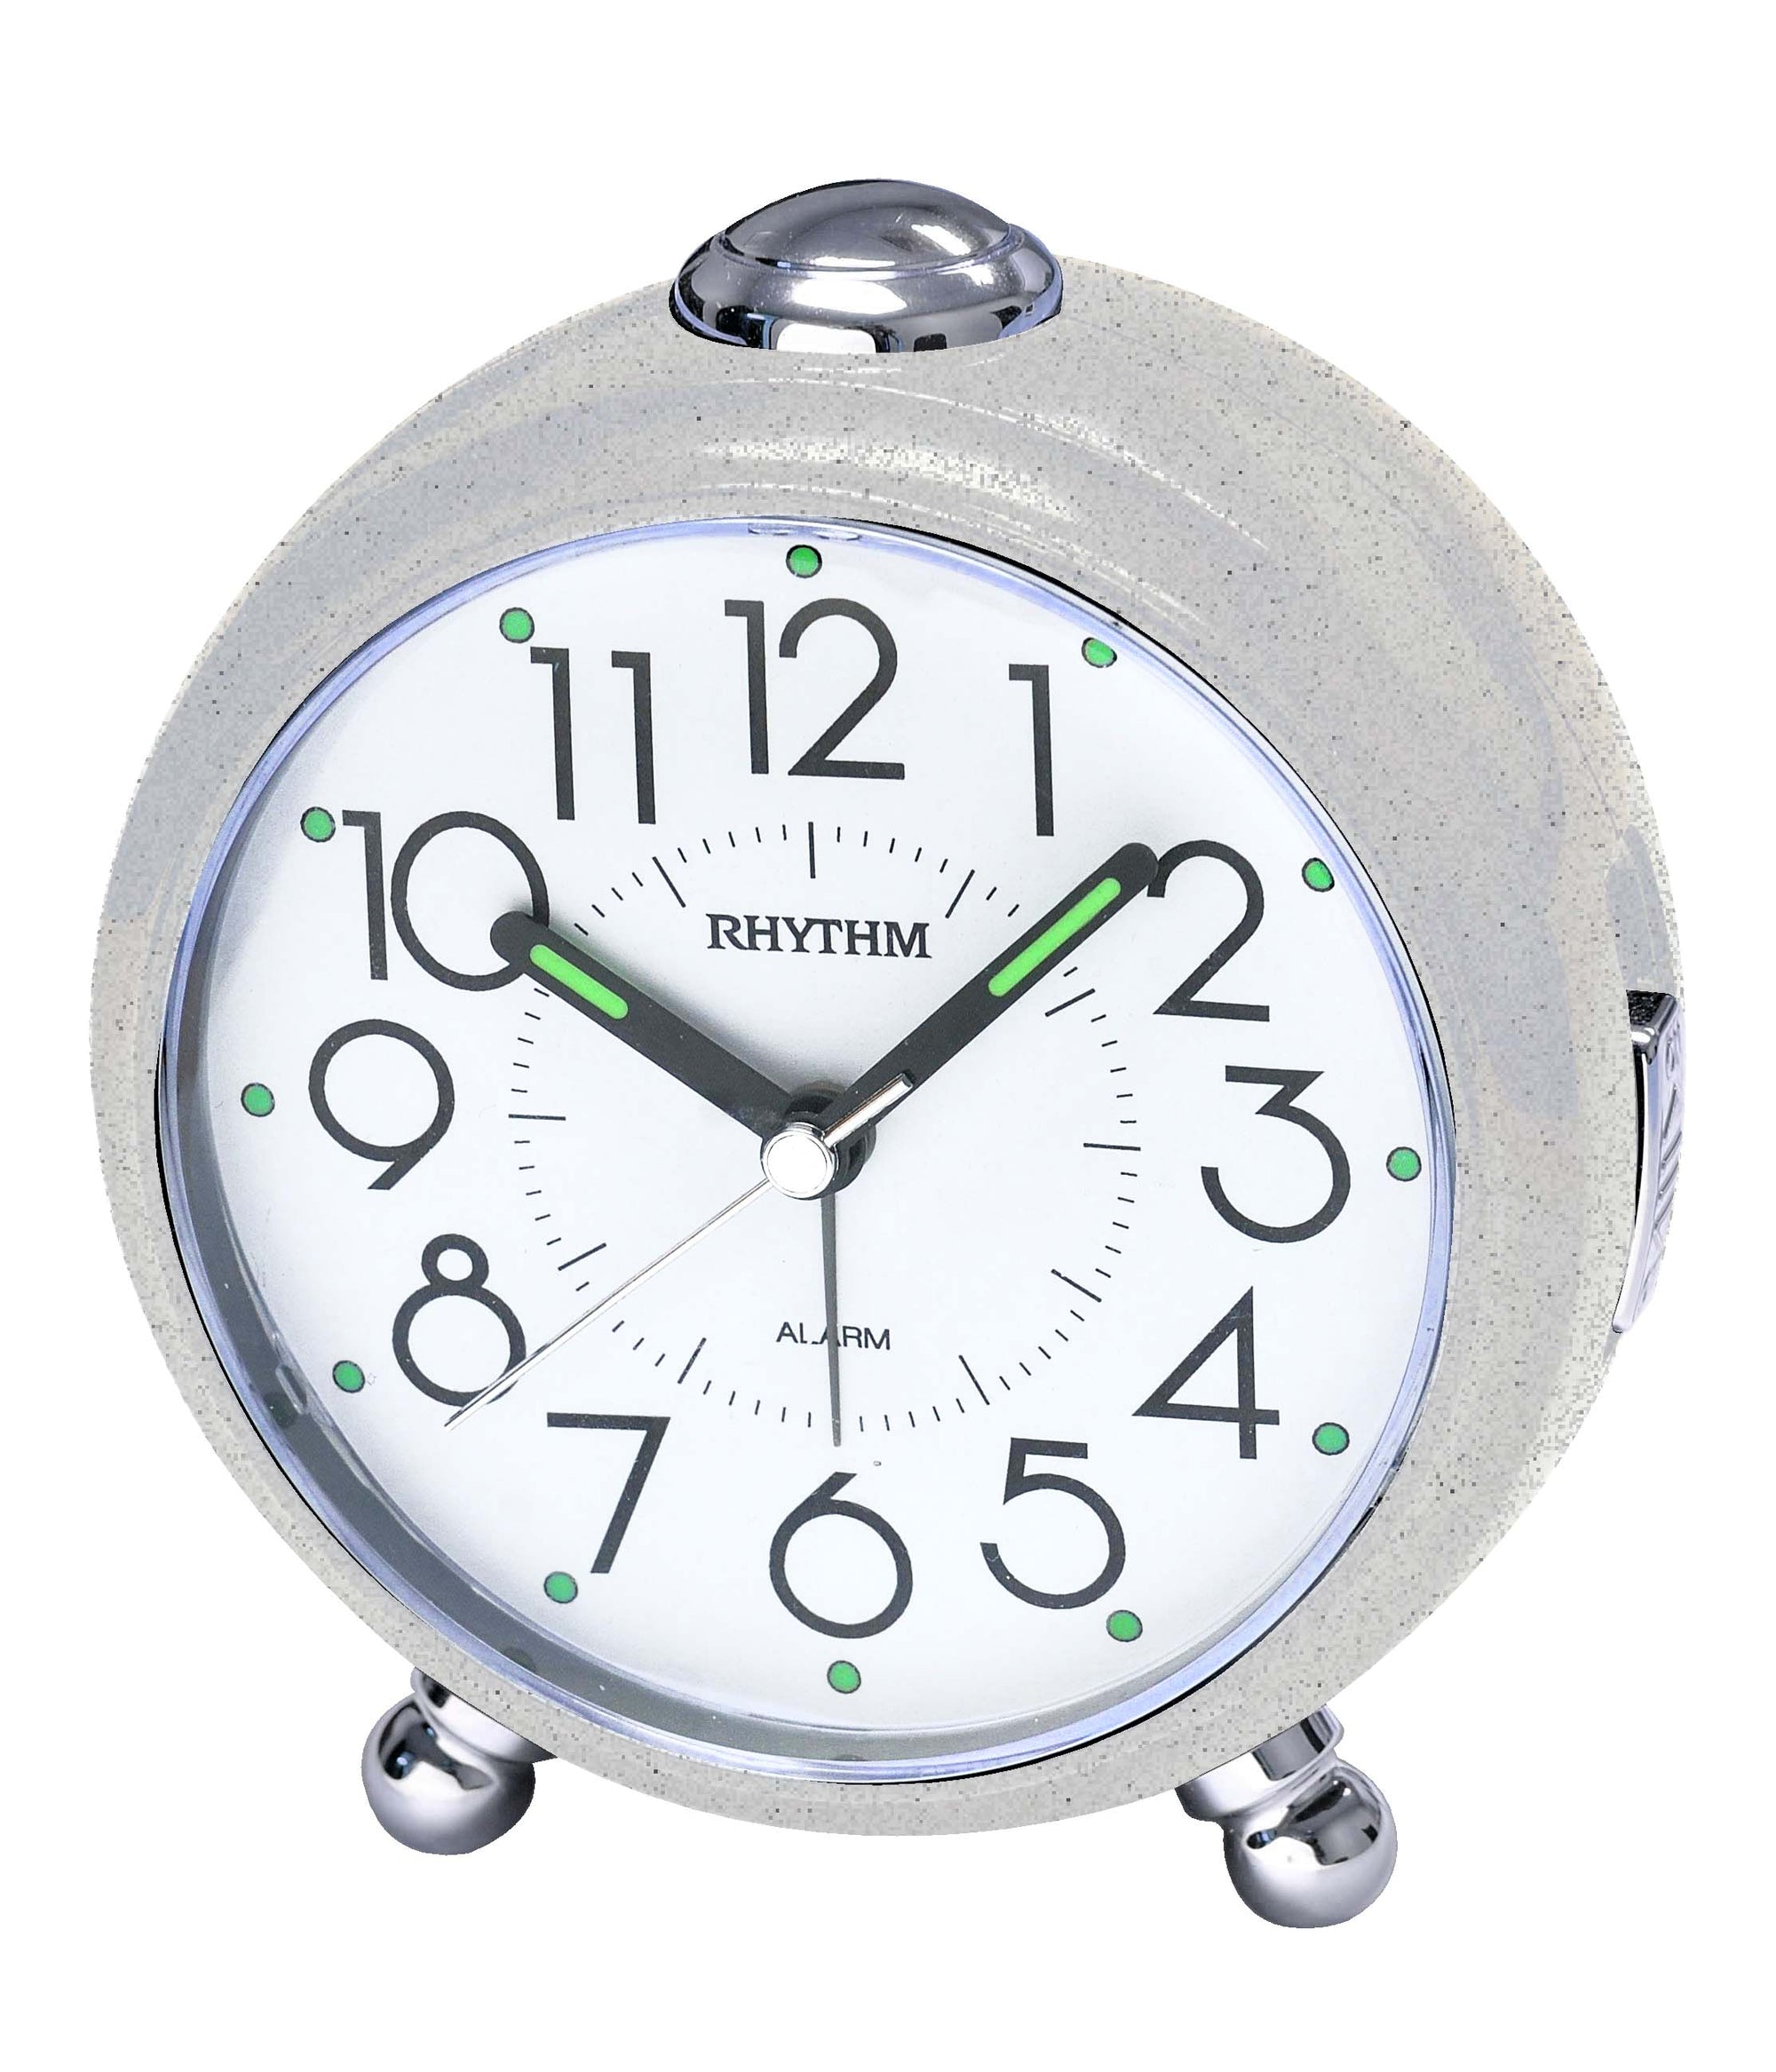 Rhythm alarm clock white CRE302NR03